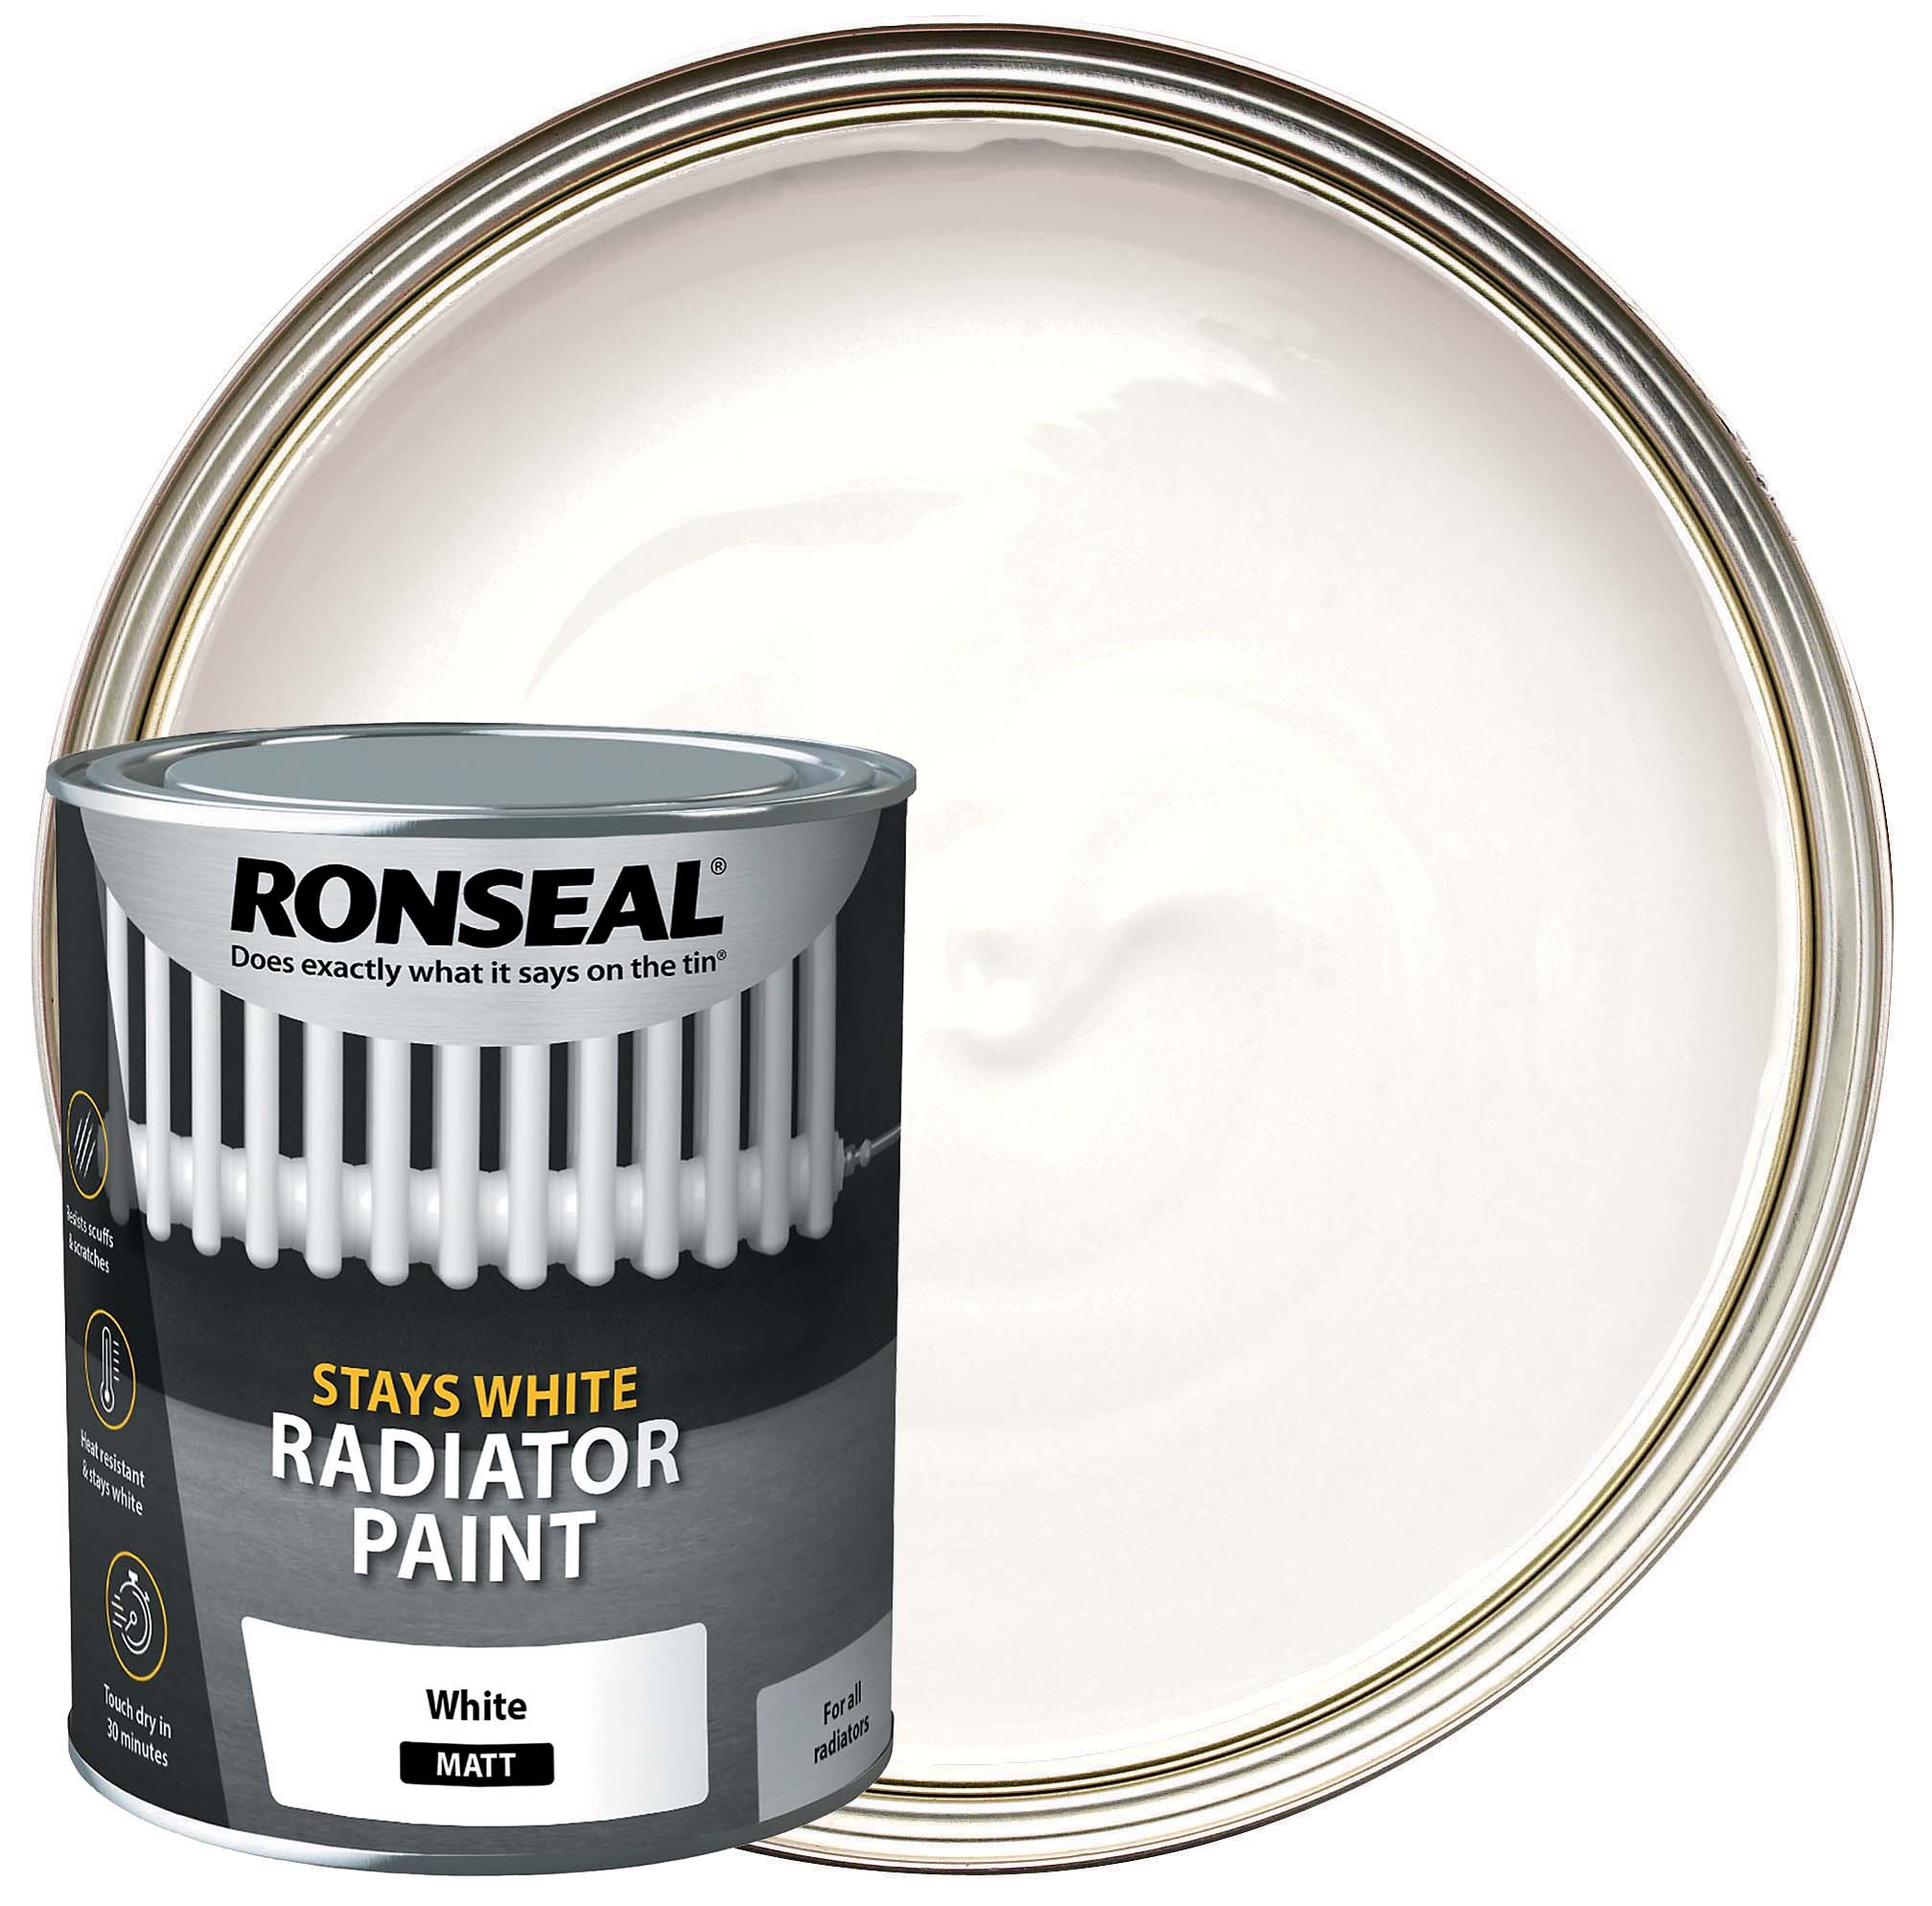 Image of Ronseal Stays White Radiator Paint White Matt 750ml